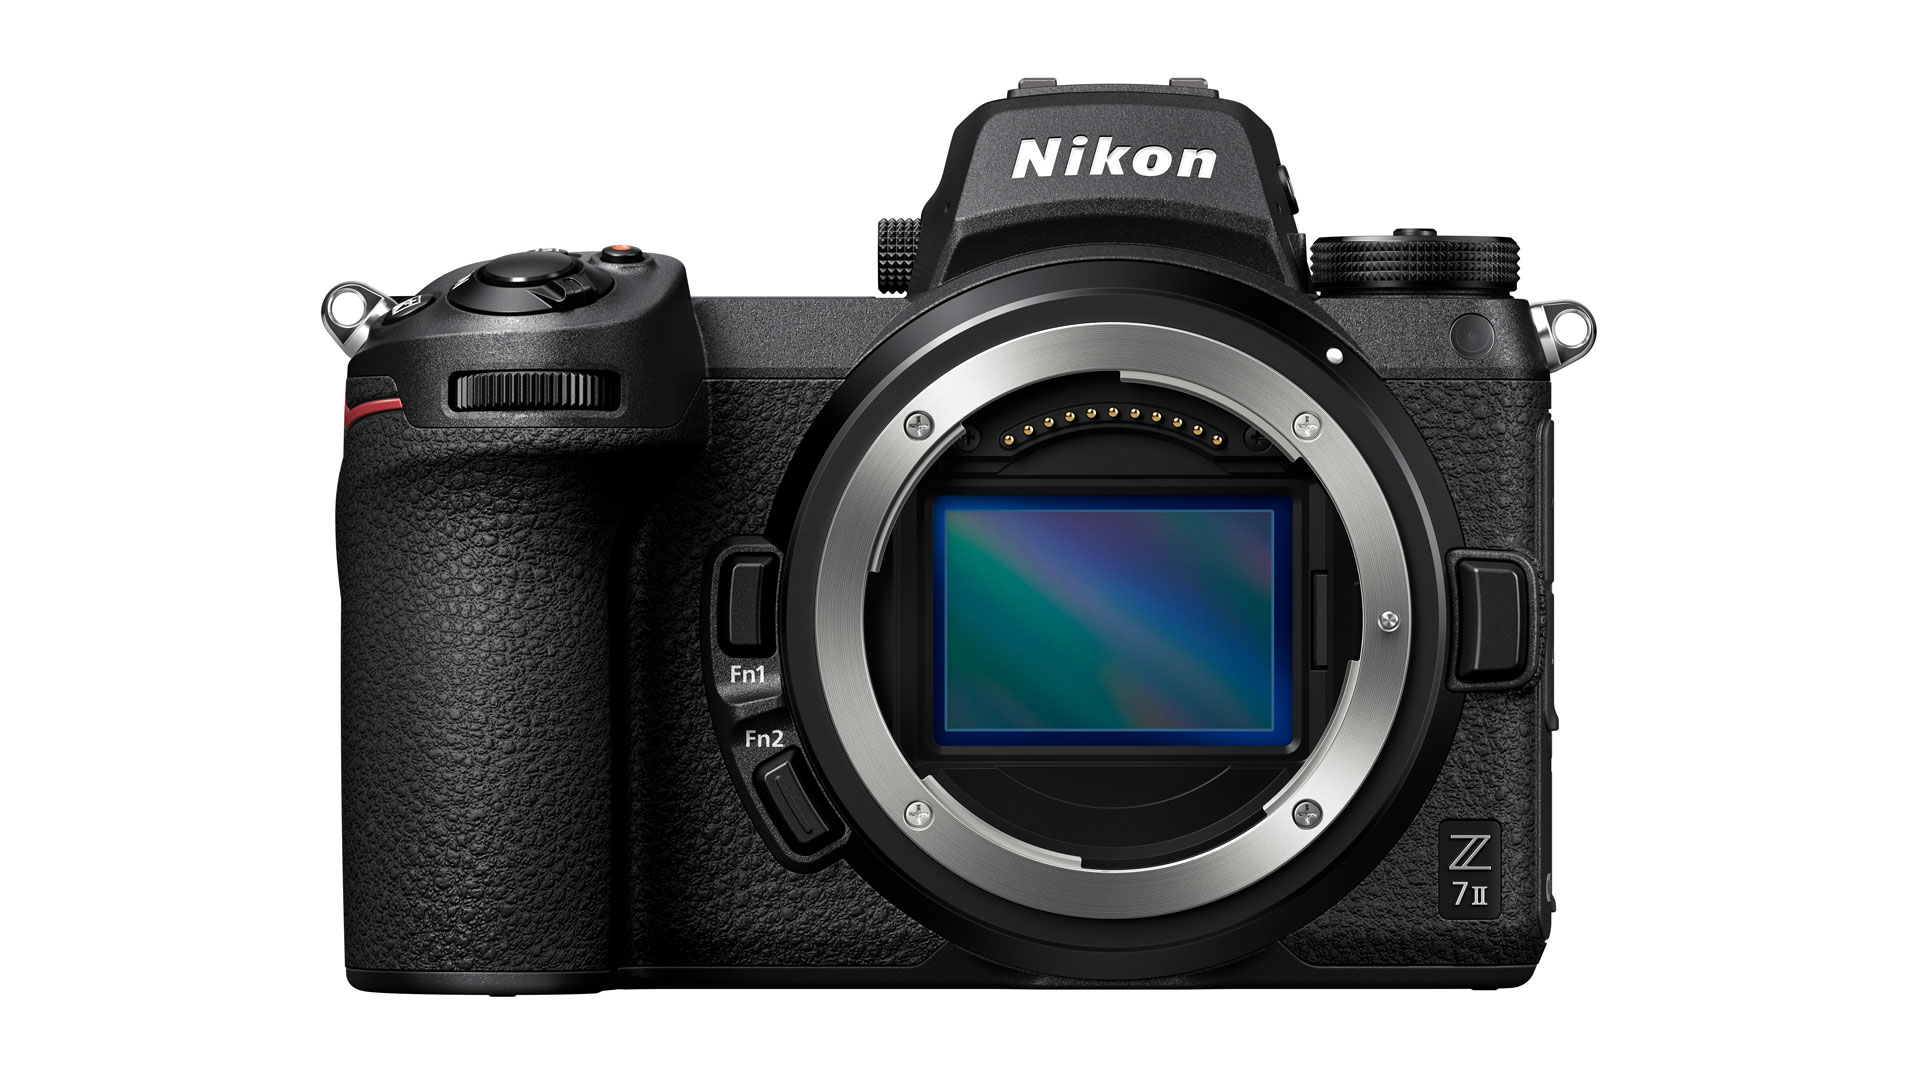 Nikon Z7ii camera body